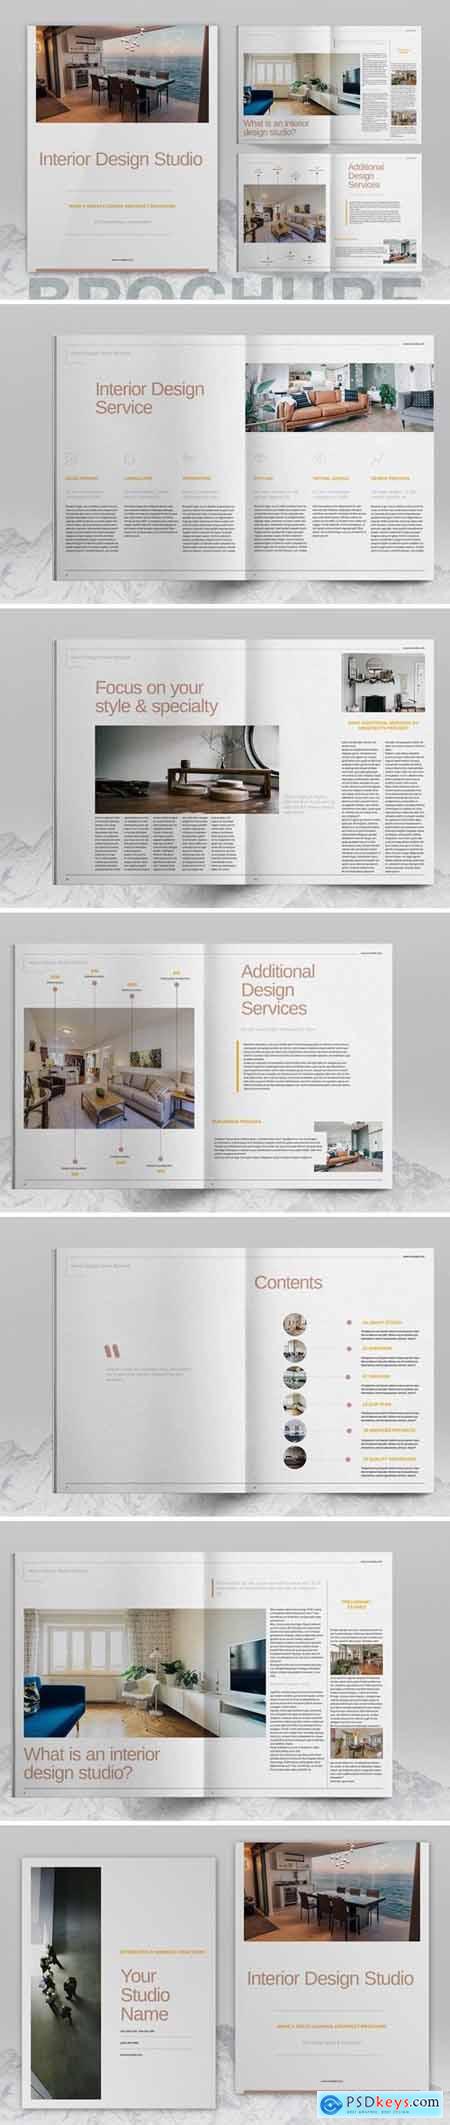 Interior Design Studio Brochure Template